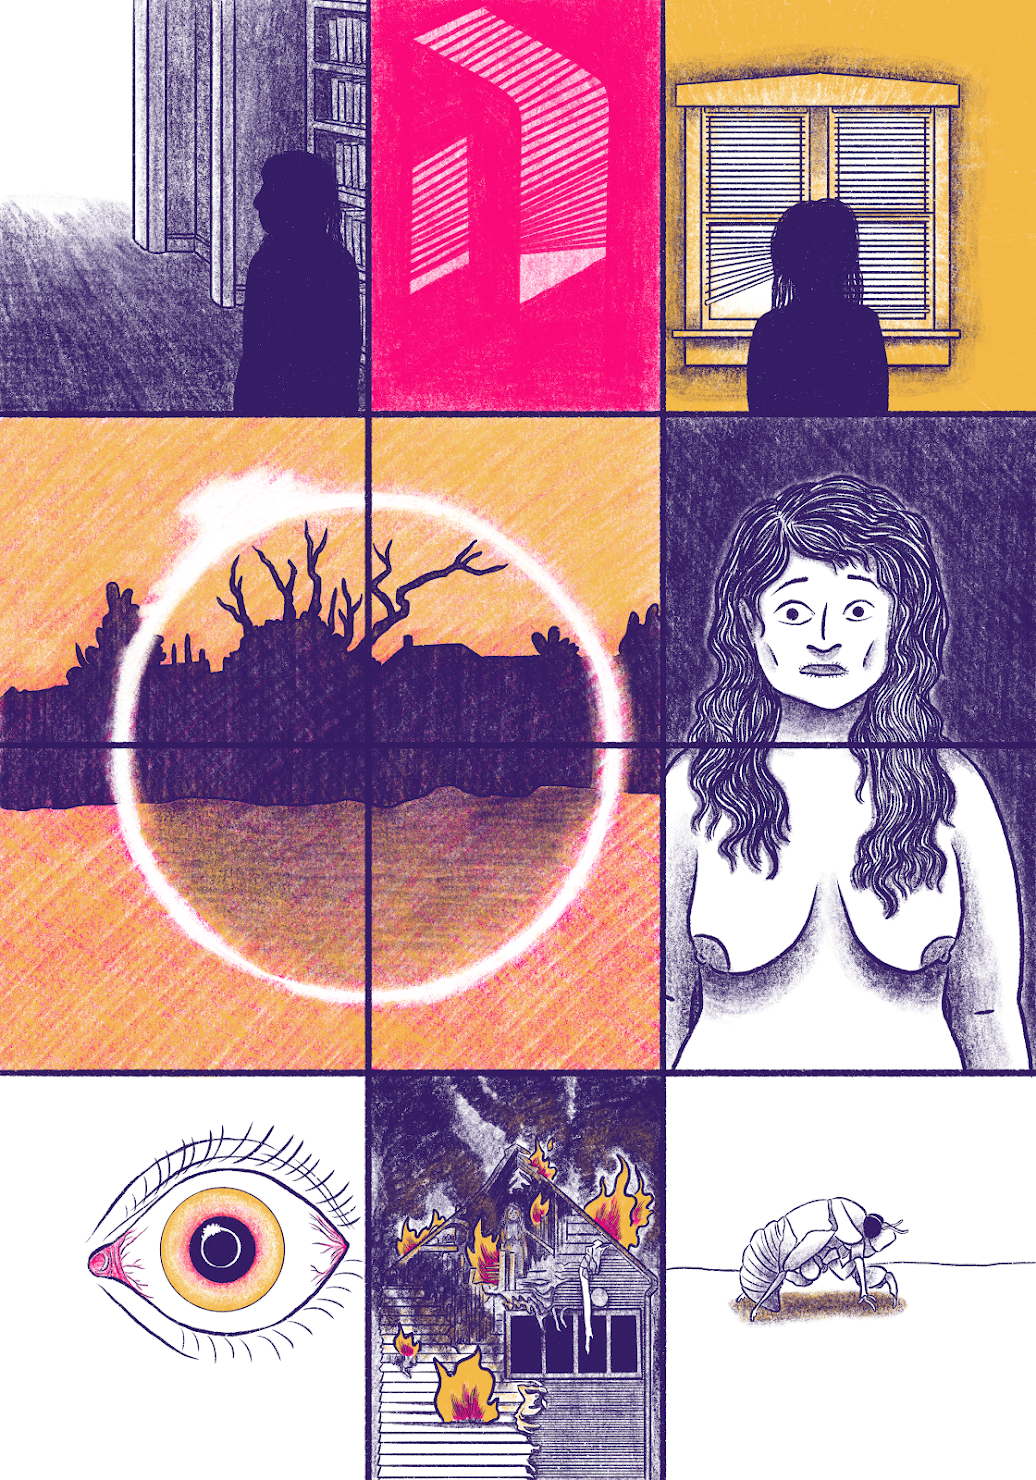 12 panels from Beth Hetland's Tender